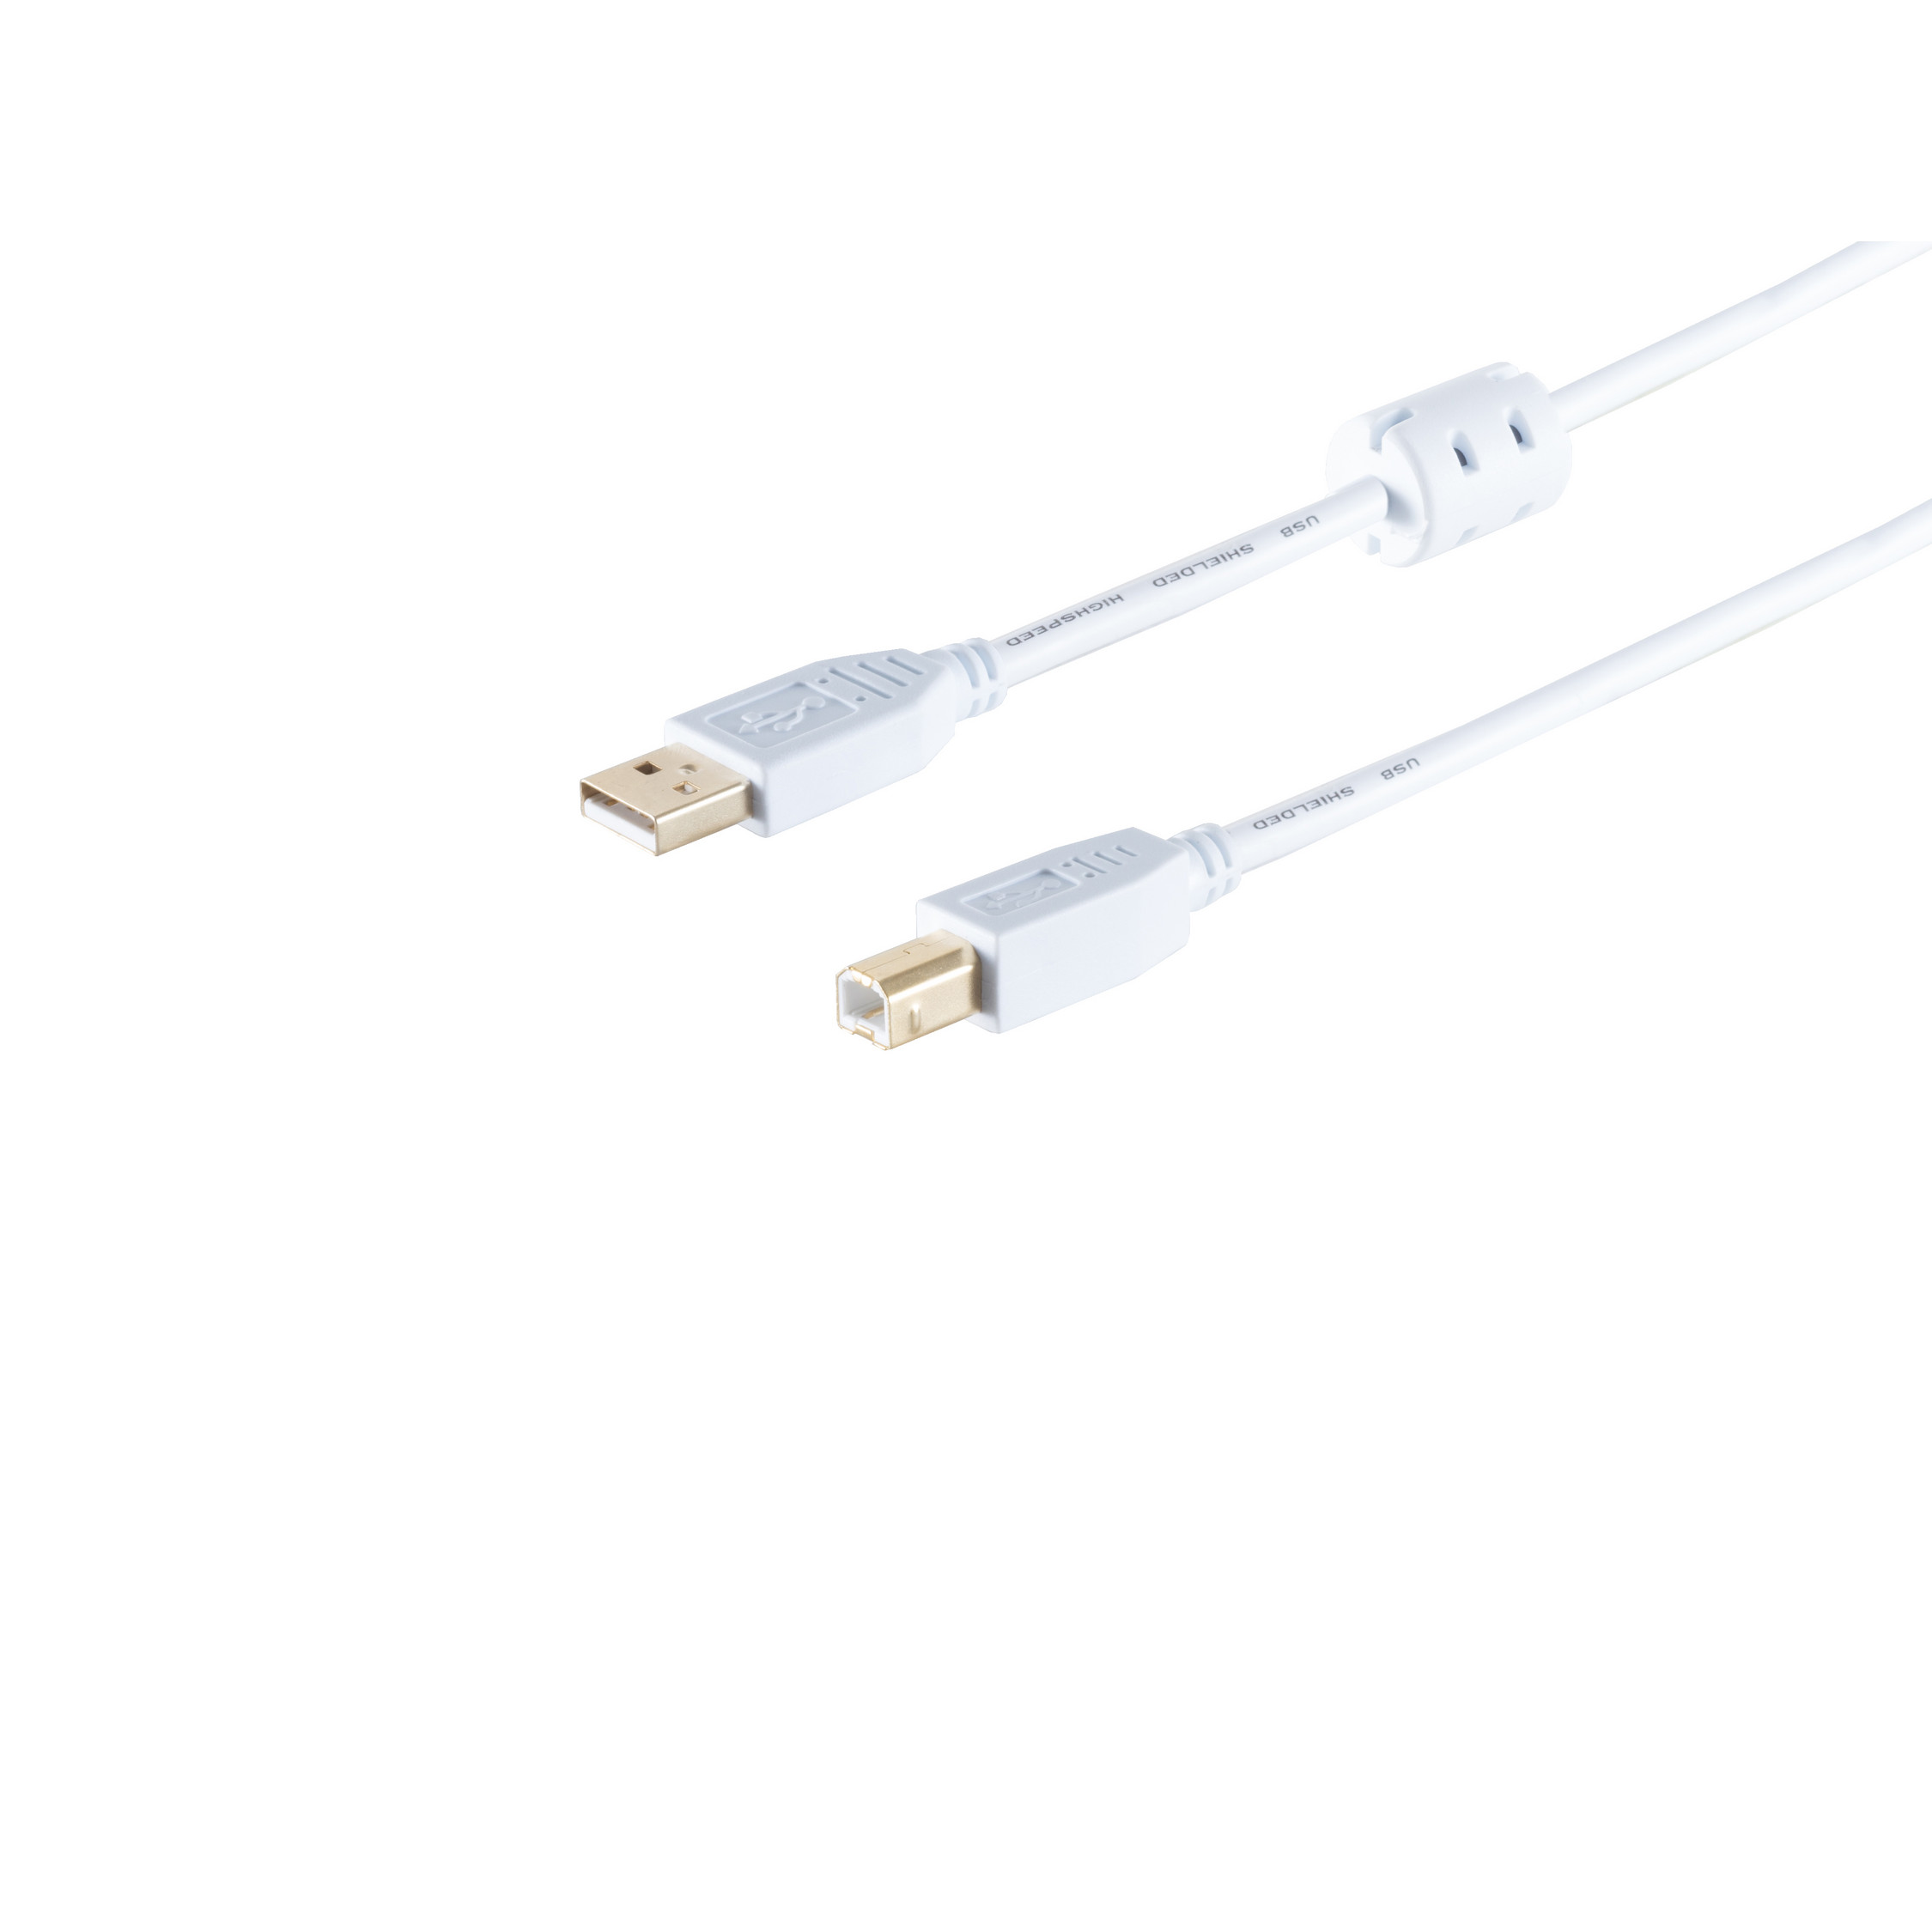 S/CONN MAXIMUM 2.0 USB mit Speed Ferrit, USB Stecker, Kabel High Kabel 3,0m CONNECTIVITY 2.0, USB weiß, A/B